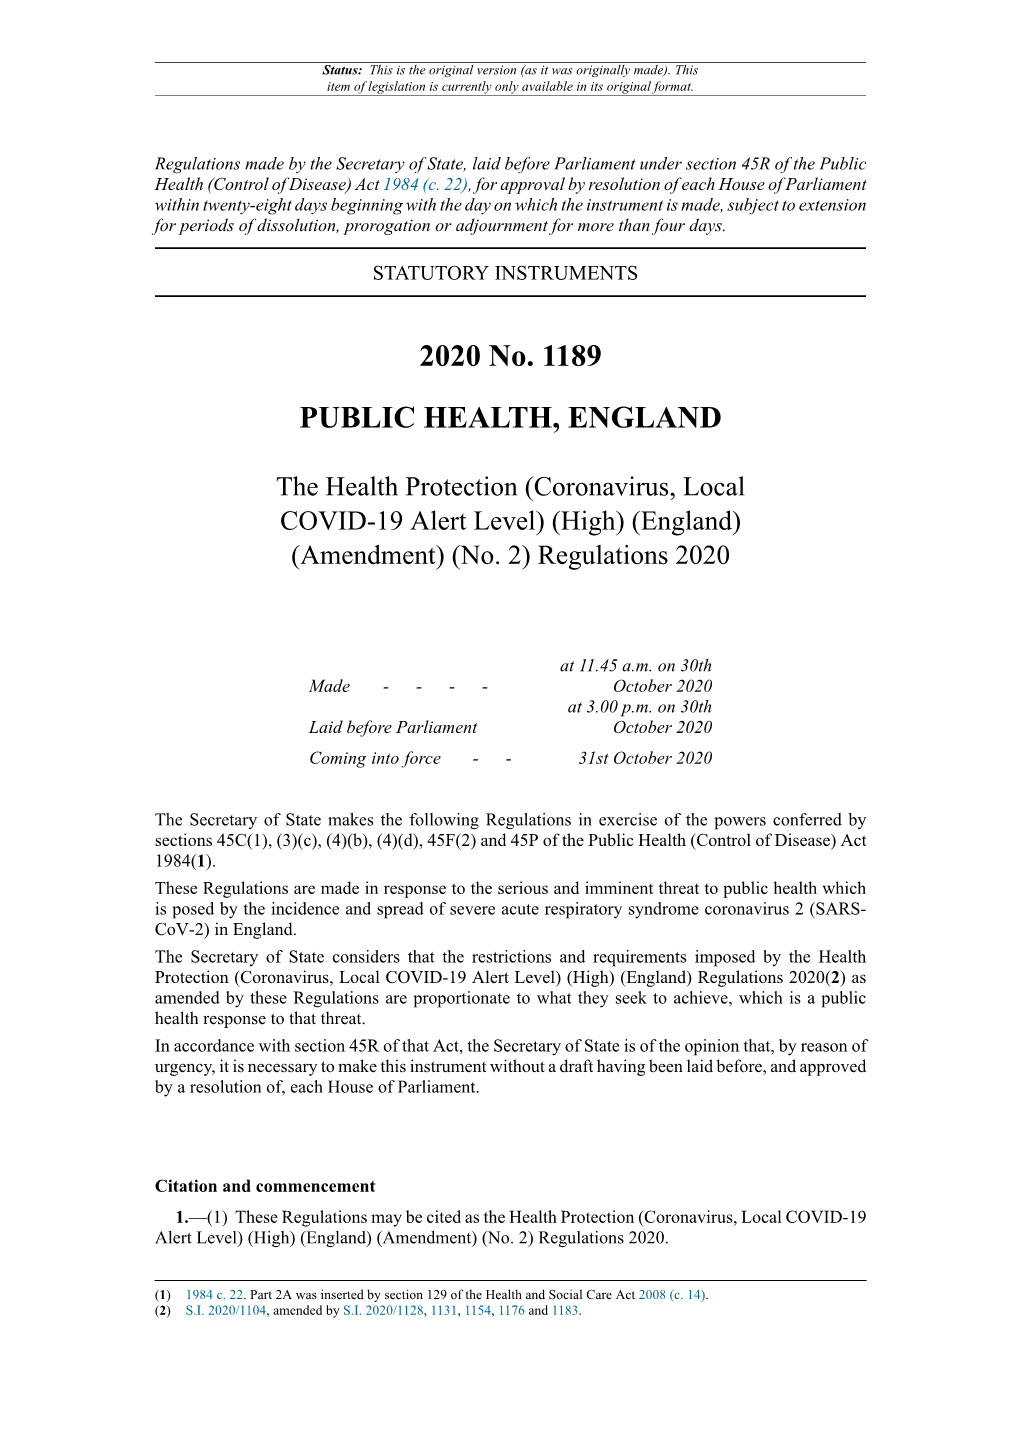 The Health Protection (Coronavirus, Local COVID-19 Alert Level) (High) (England) (Amendment) (No